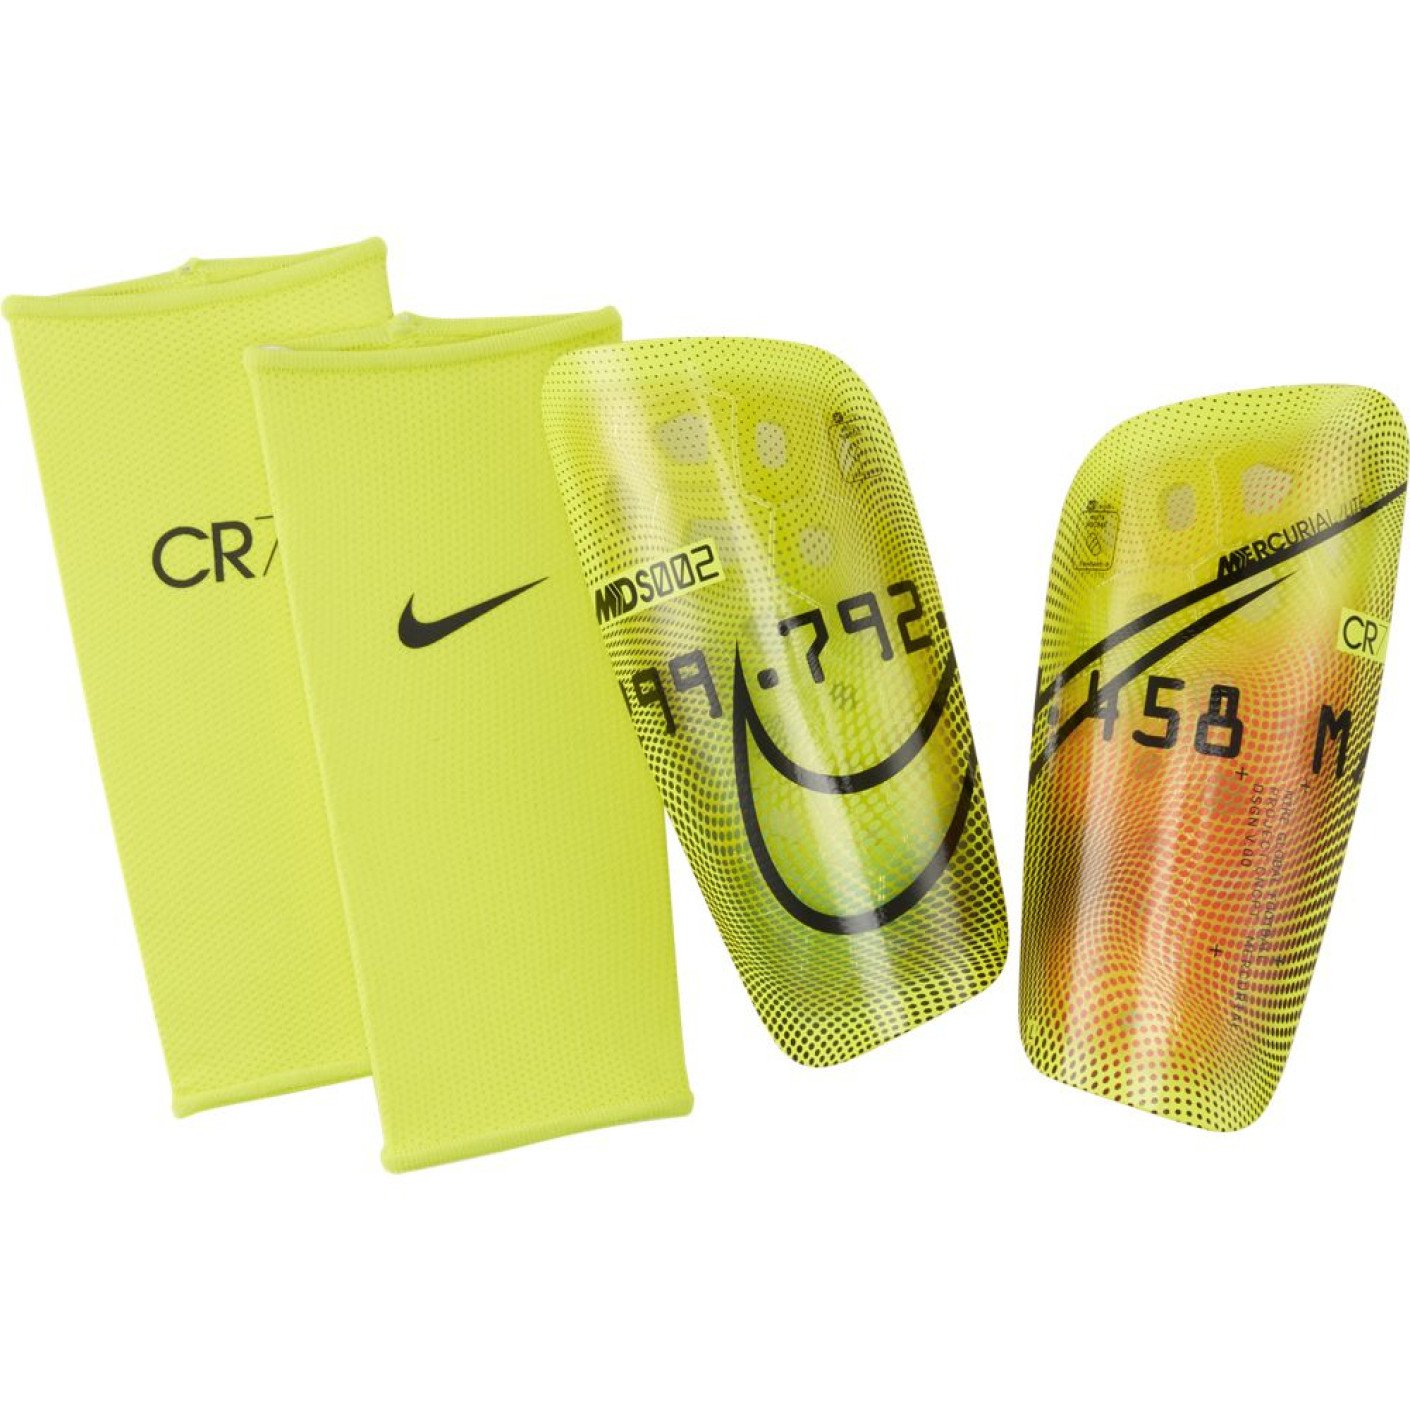 Nike Mercurial Lite CR7 Scheenbeschermers Geel Groen